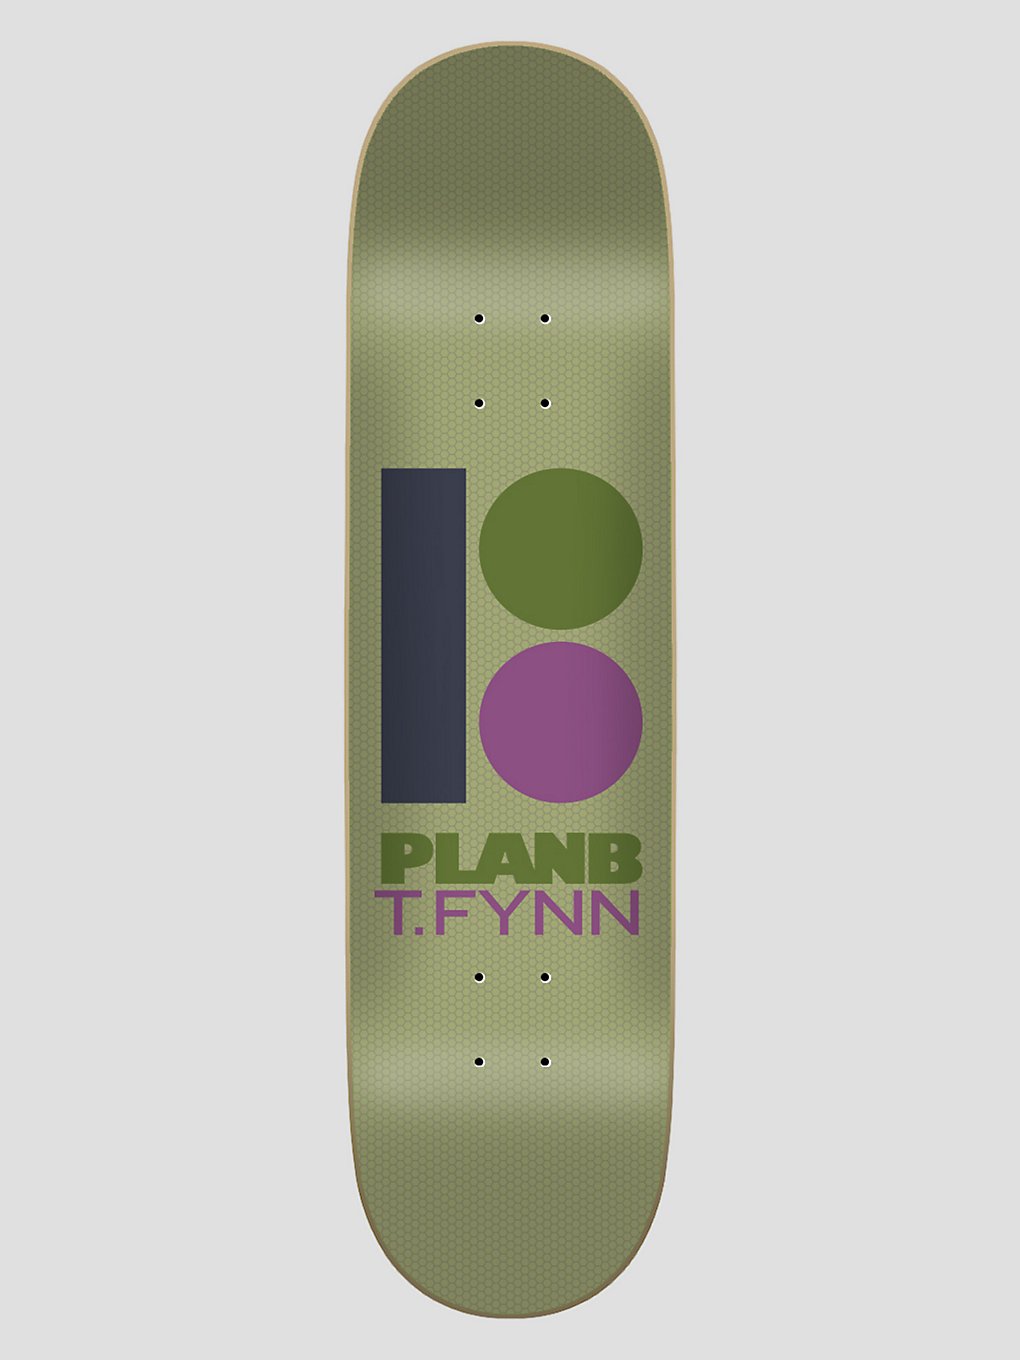 Plan B Metal Honeycomb Fynn 8.25"X32,125" Skateboard Deck uni kaufen